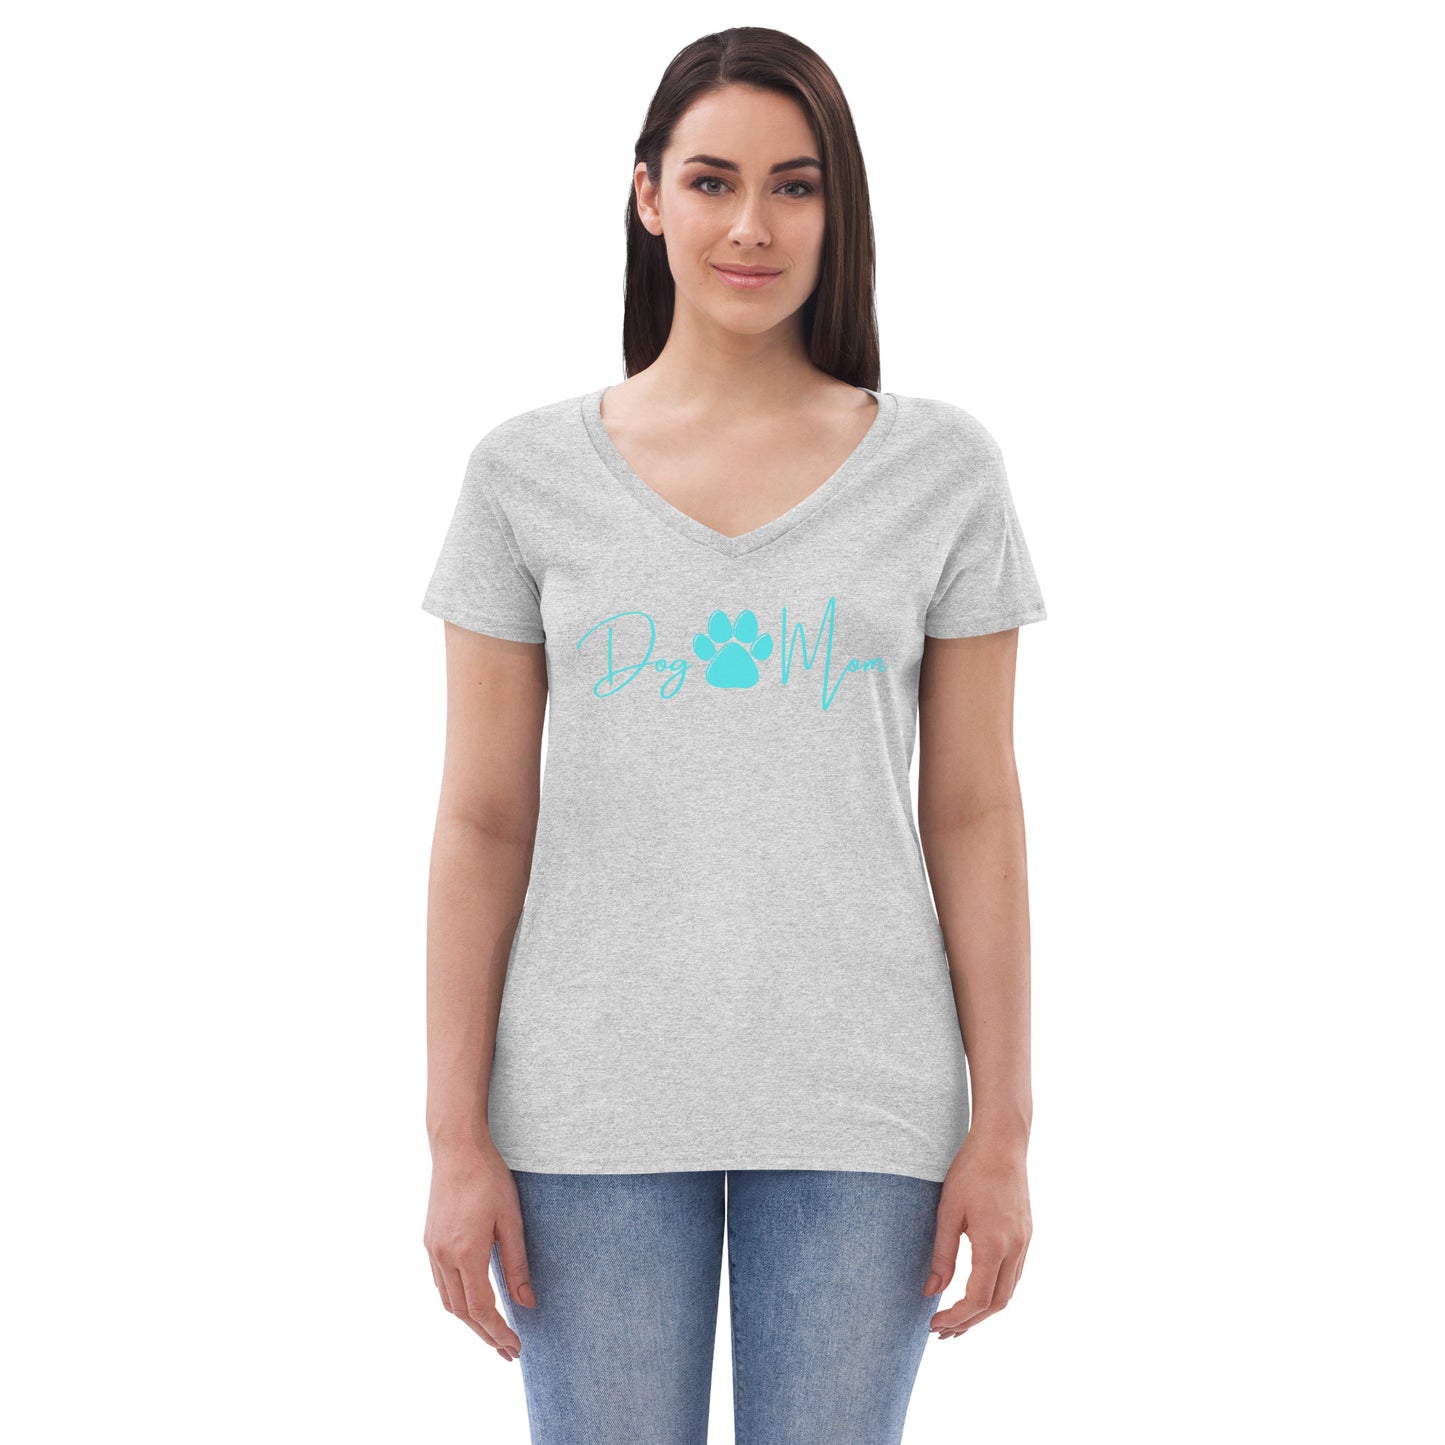 Jessi Blue Dog Mom Women’s recycled v-neck t-shirt